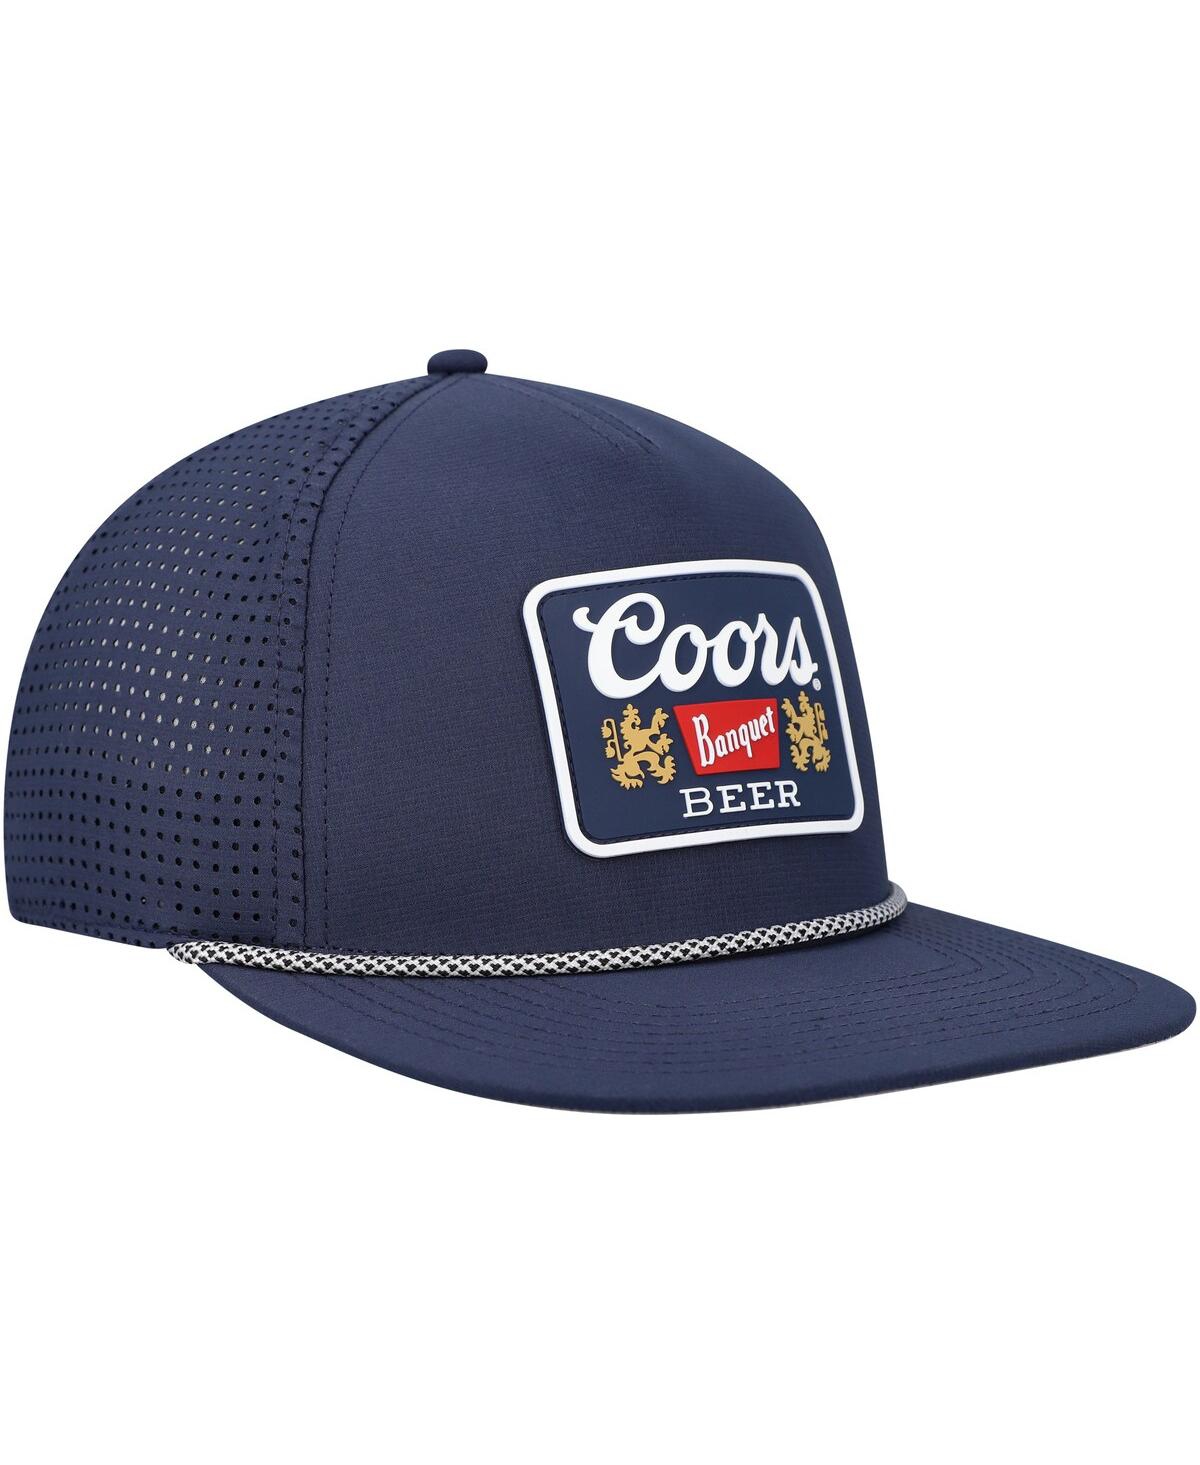 Shop American Needle Men's  Navy Coors Buxton Pro Adjustable Hat